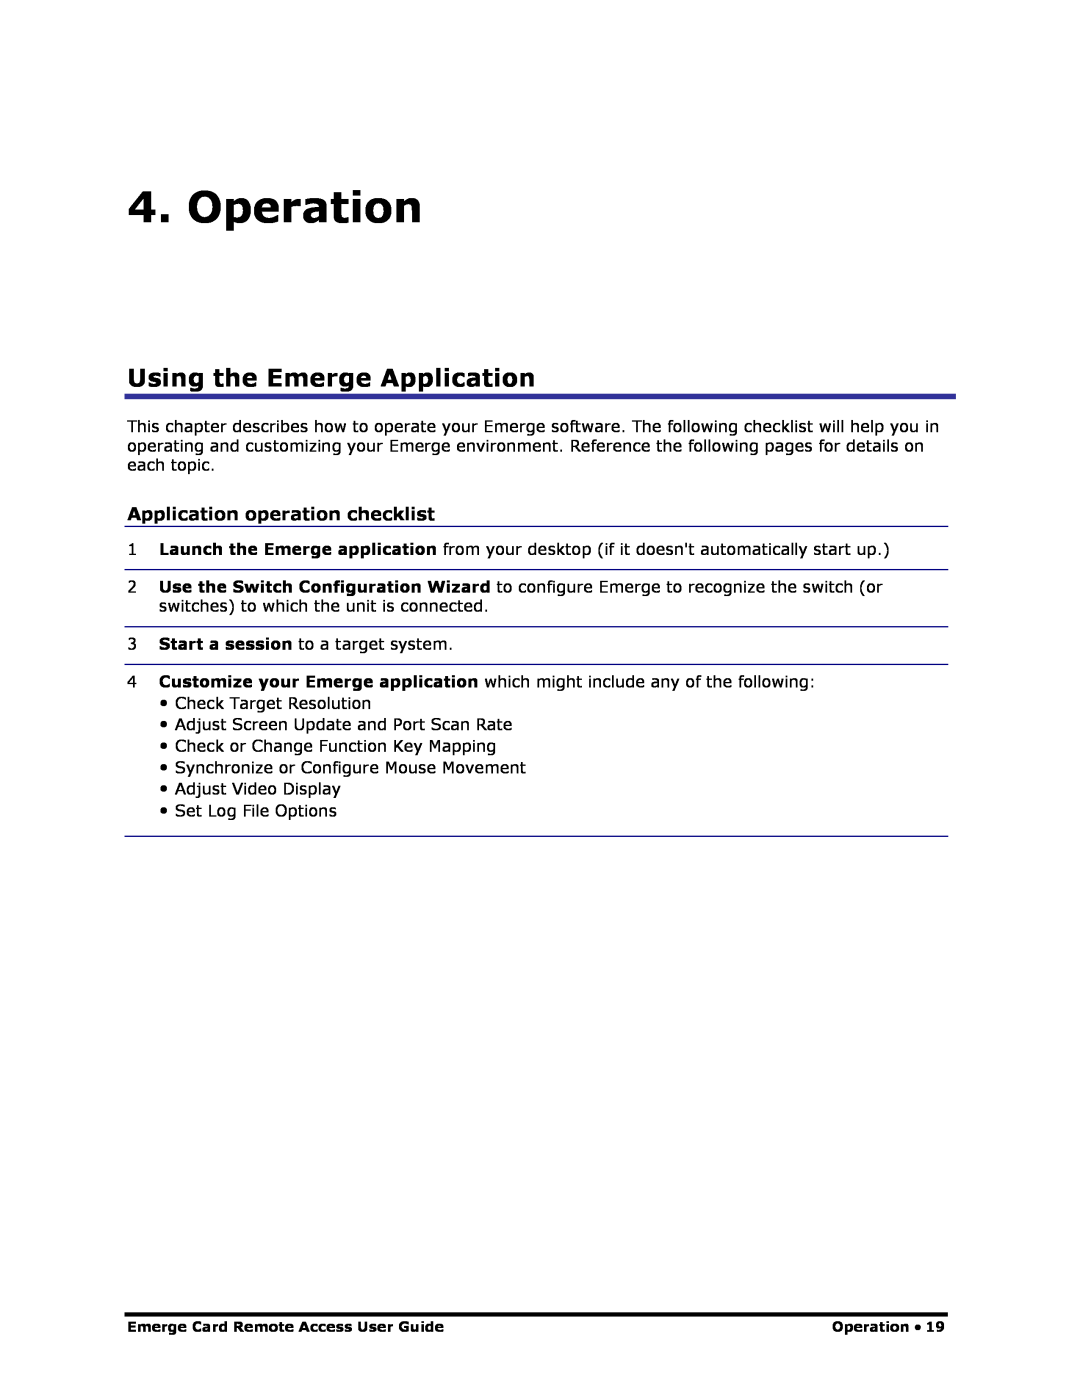 Apex Digital Apex EmergeCard Remote Access manual Operation, Using the Emerge Application, Application operation checklist 